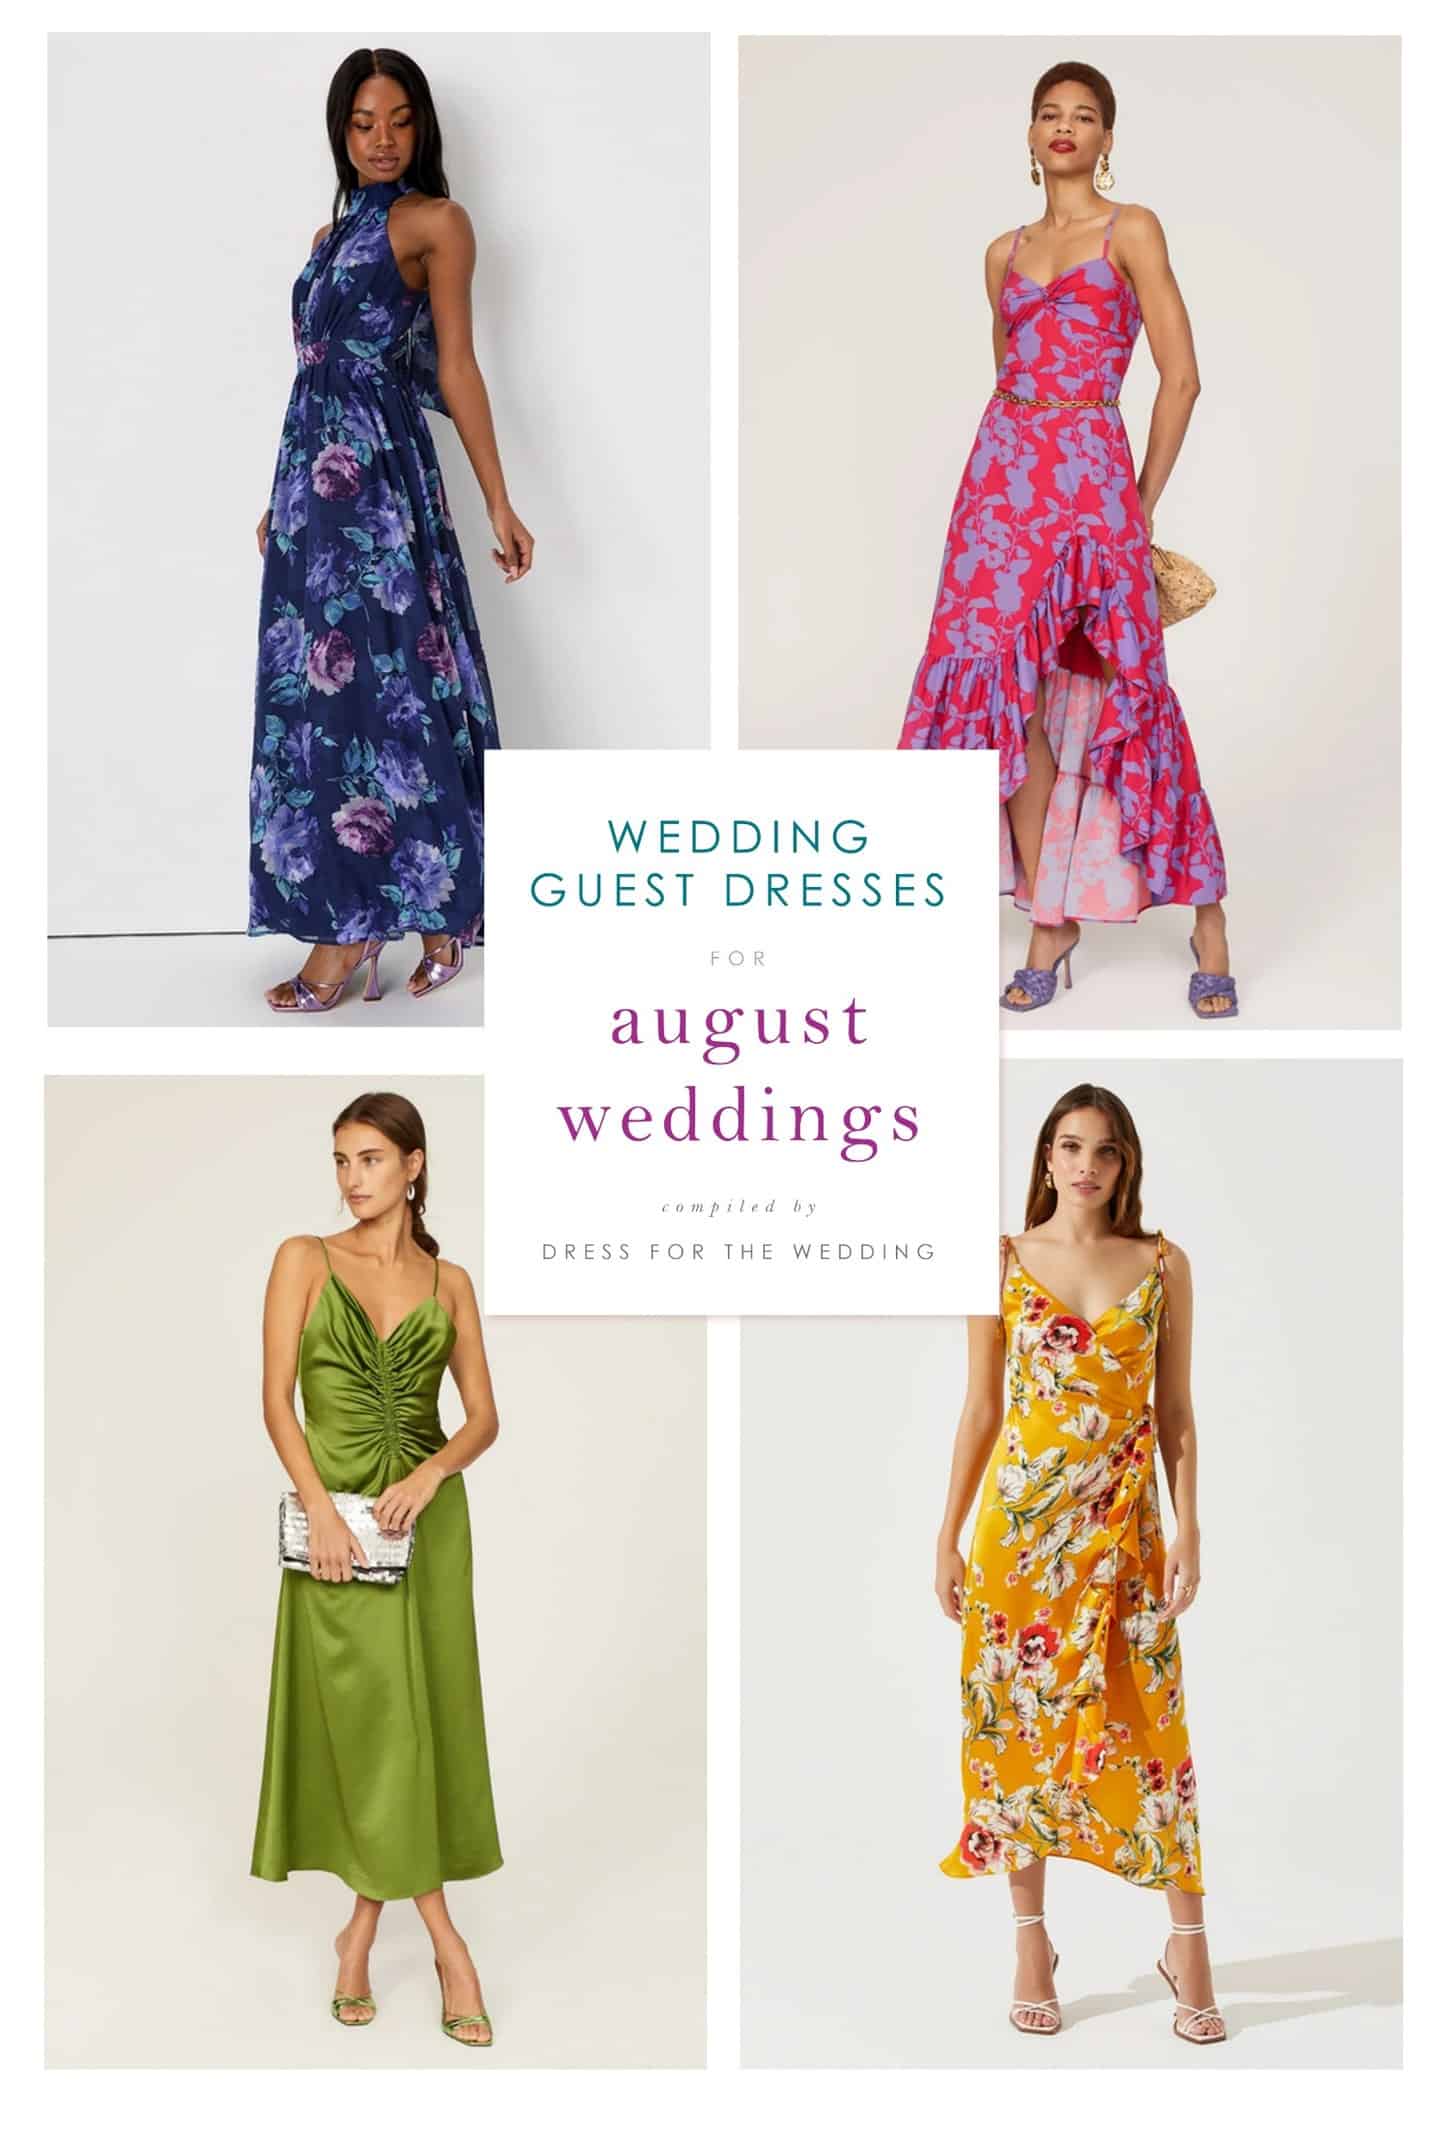 dresses wear to wedding